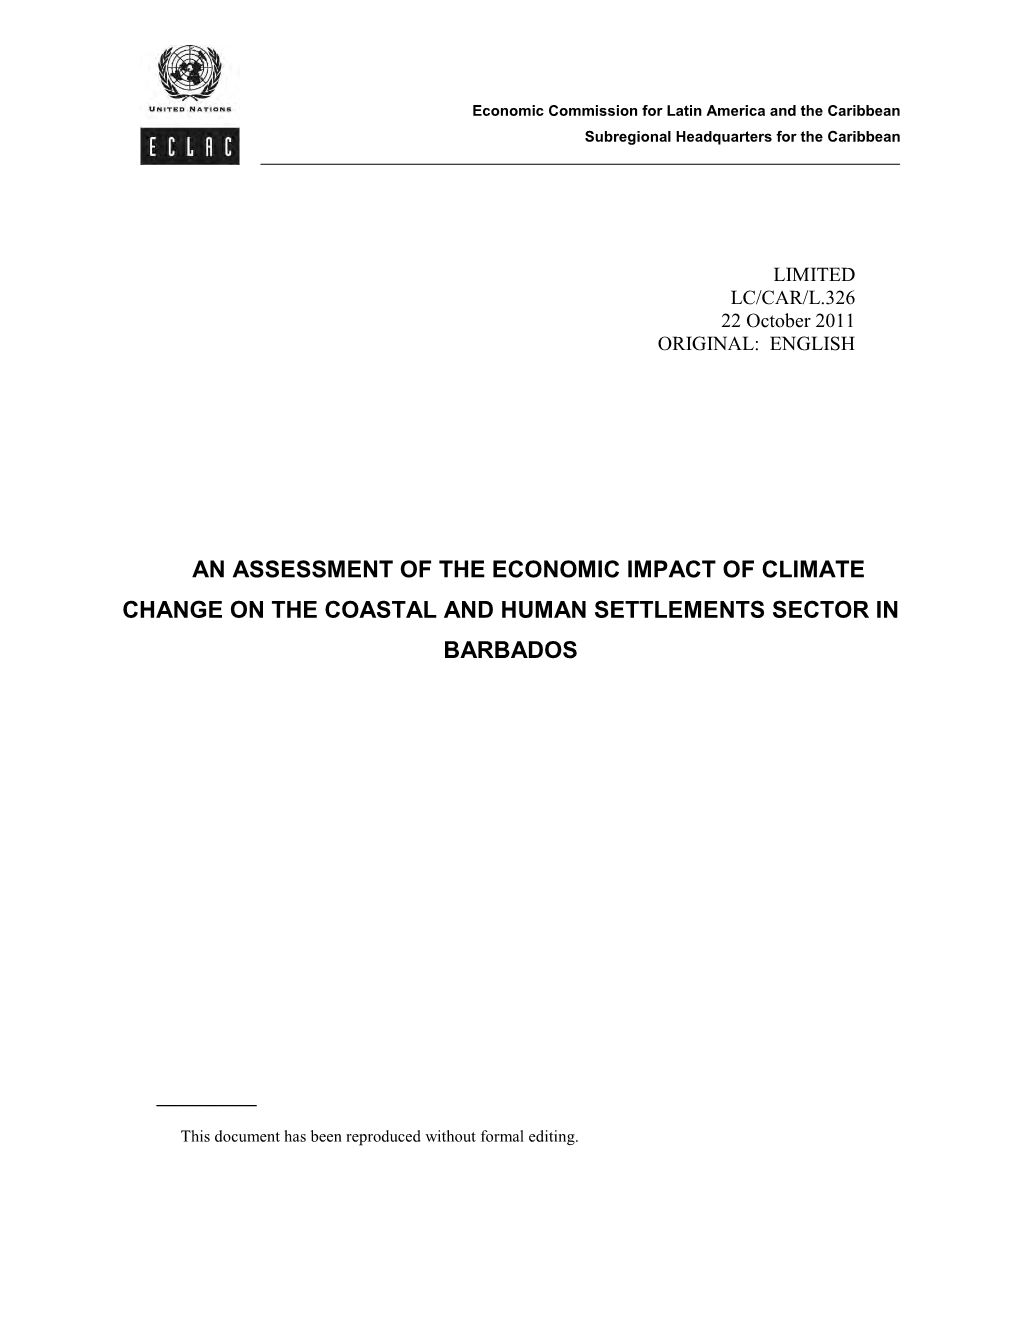 Climate Change and Coastal Human Settlements: Barbados and Guyana